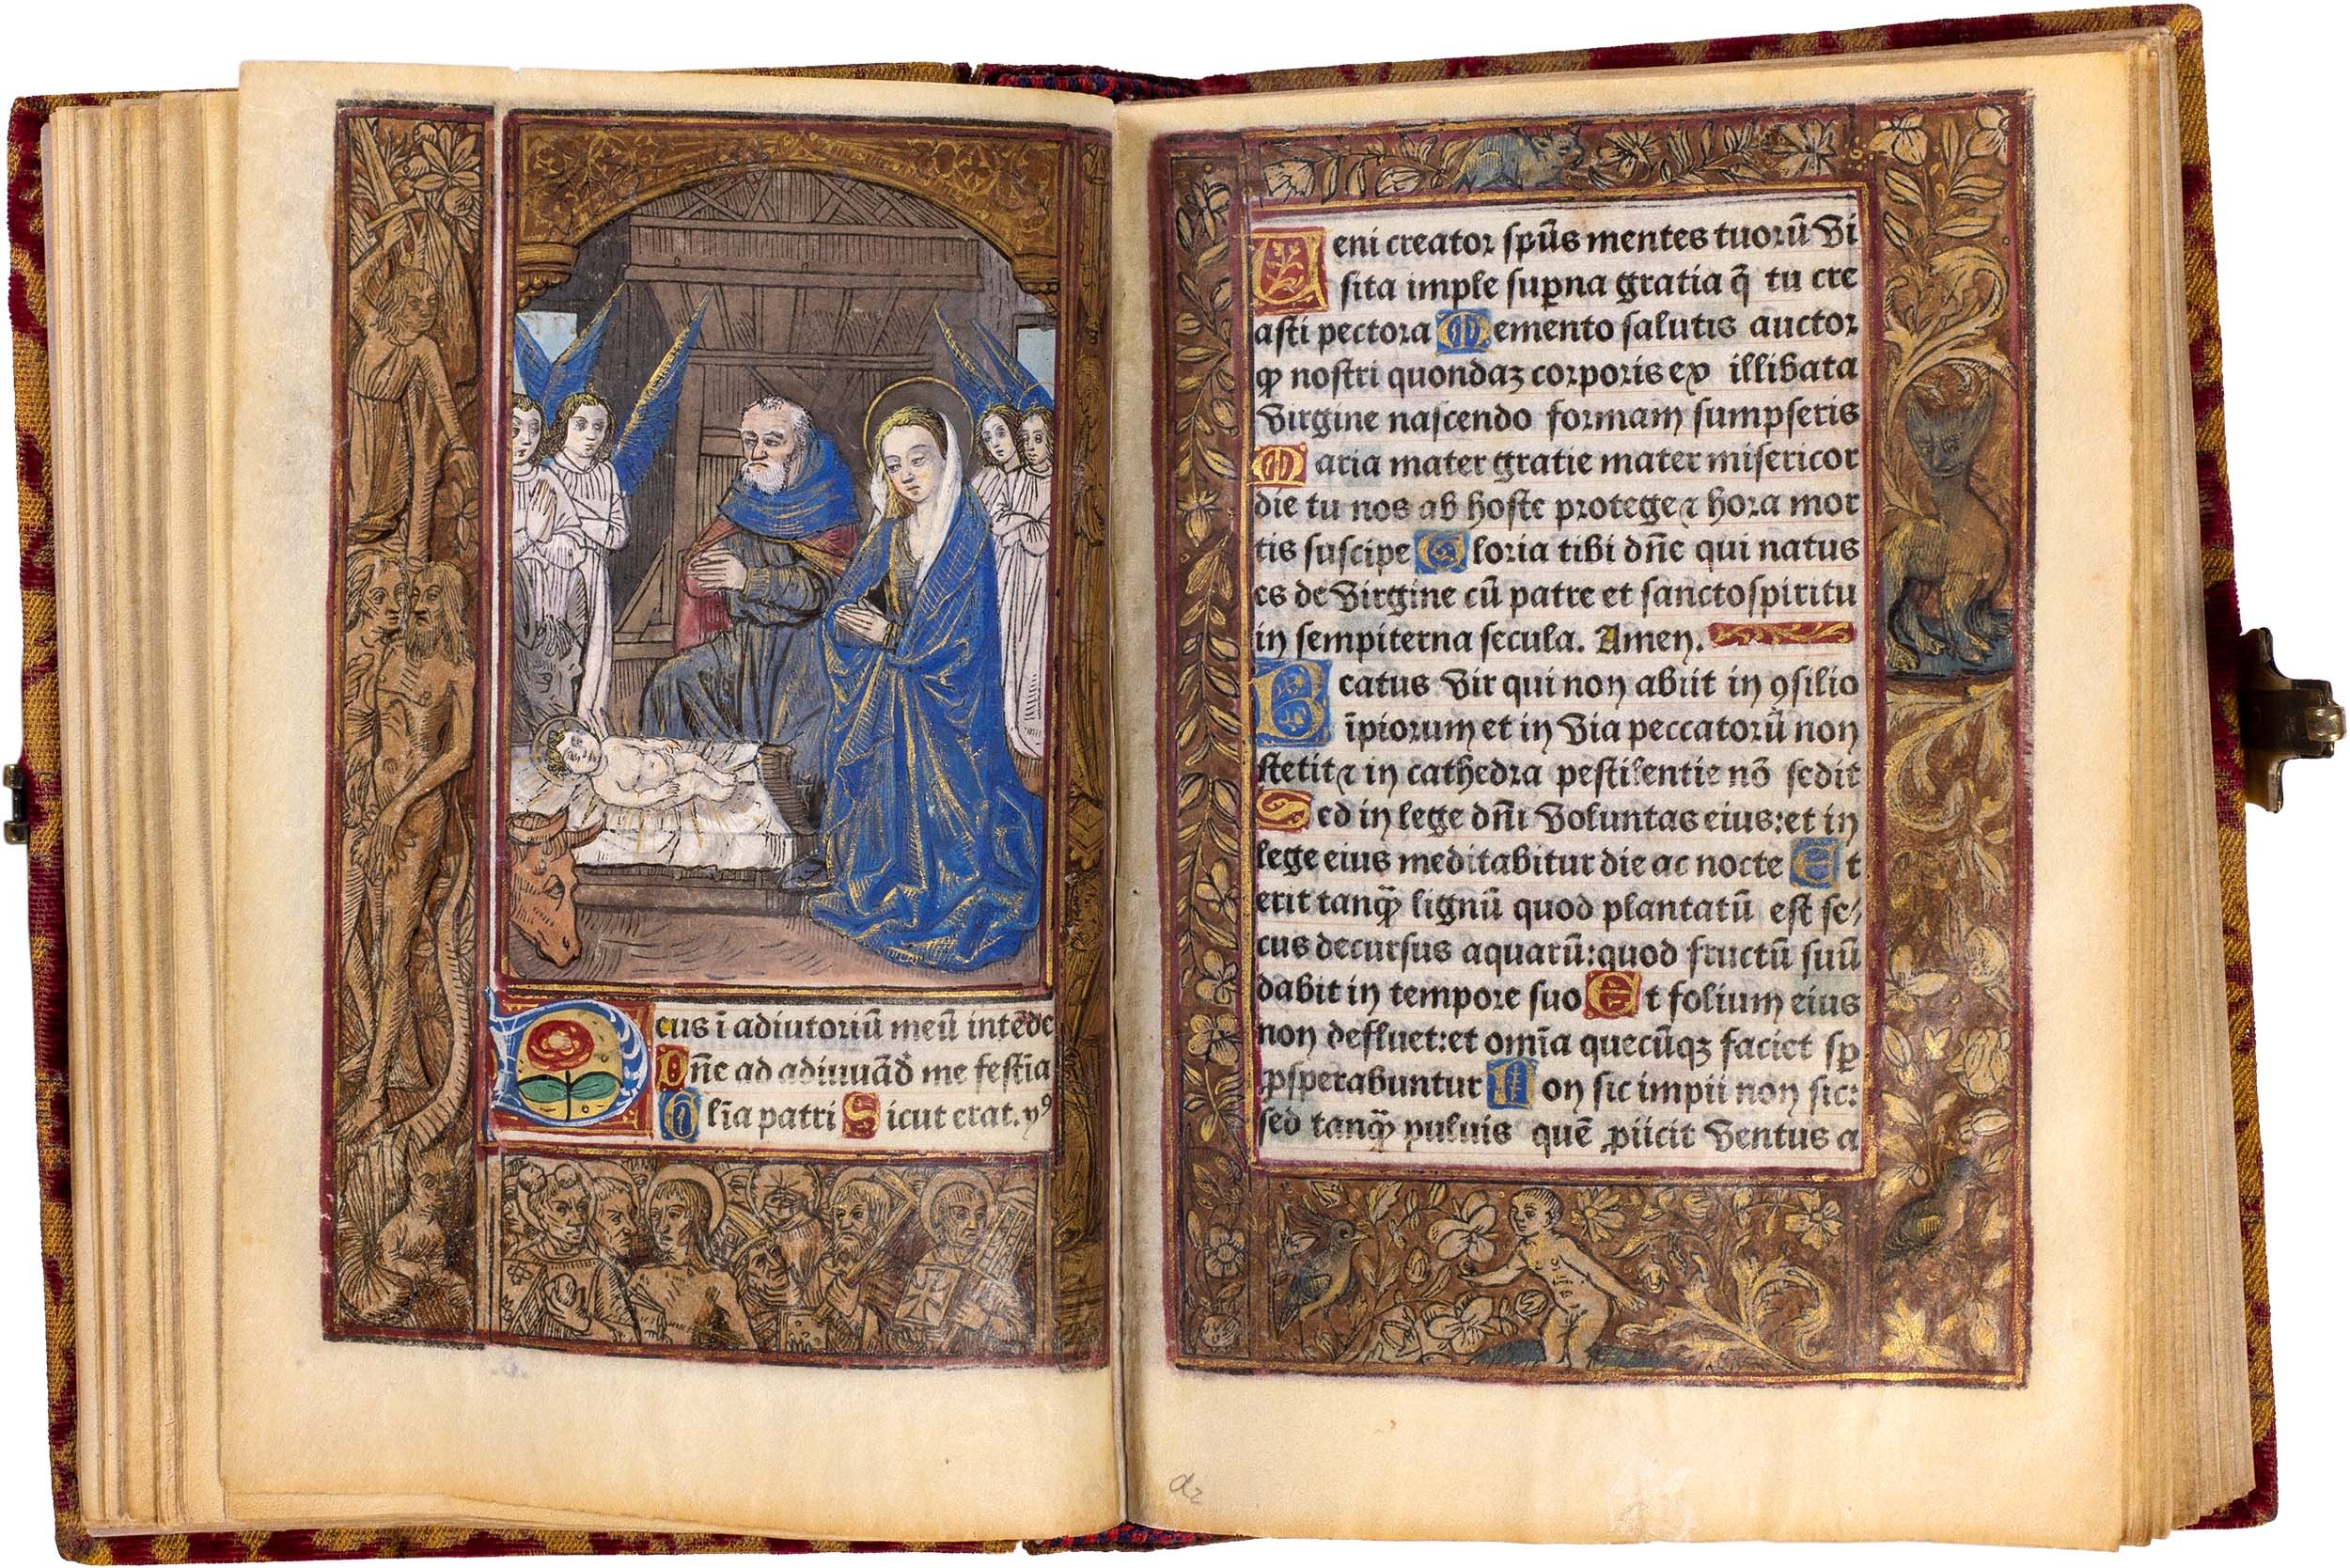 Horae-bmv-1488-gamma-dupre-printed-book-of-hours-danse-macabre-camaieu-dor-illuminated-vellum-copy-48.jpg